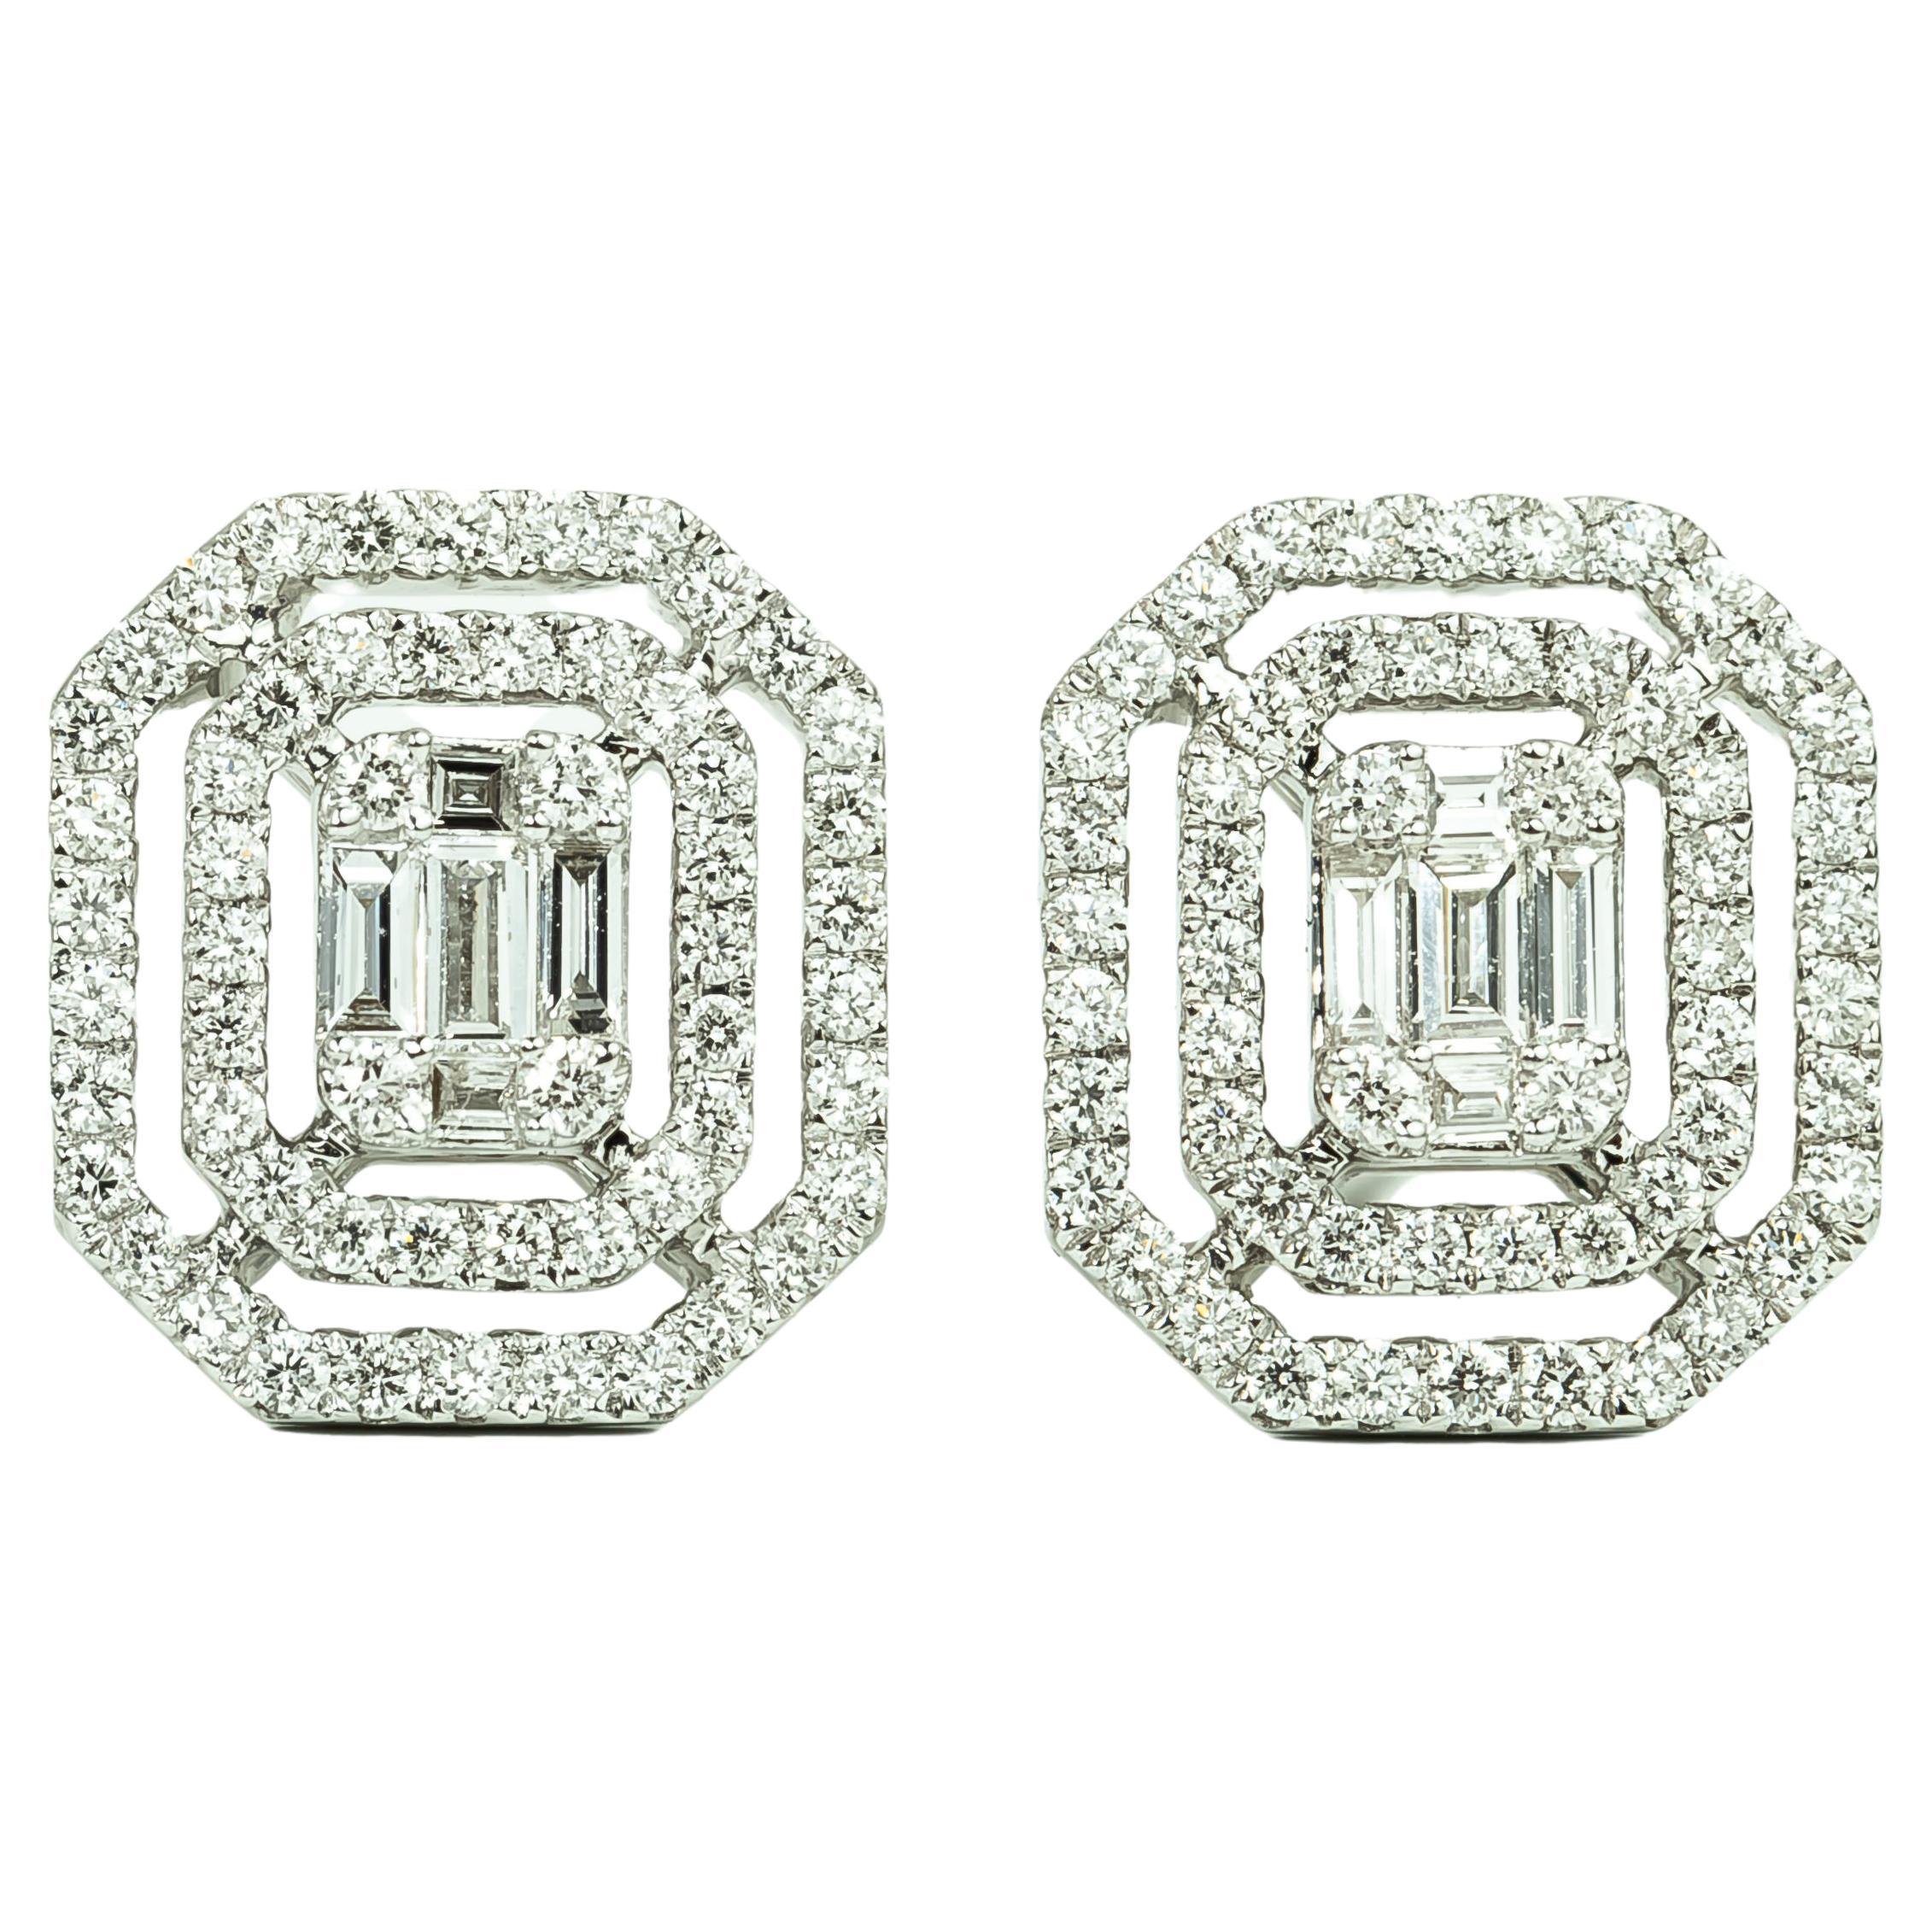 1 Carat Art Deco Diamond Baguette Cut Earrings with Illusion Setting, G VS For Sale